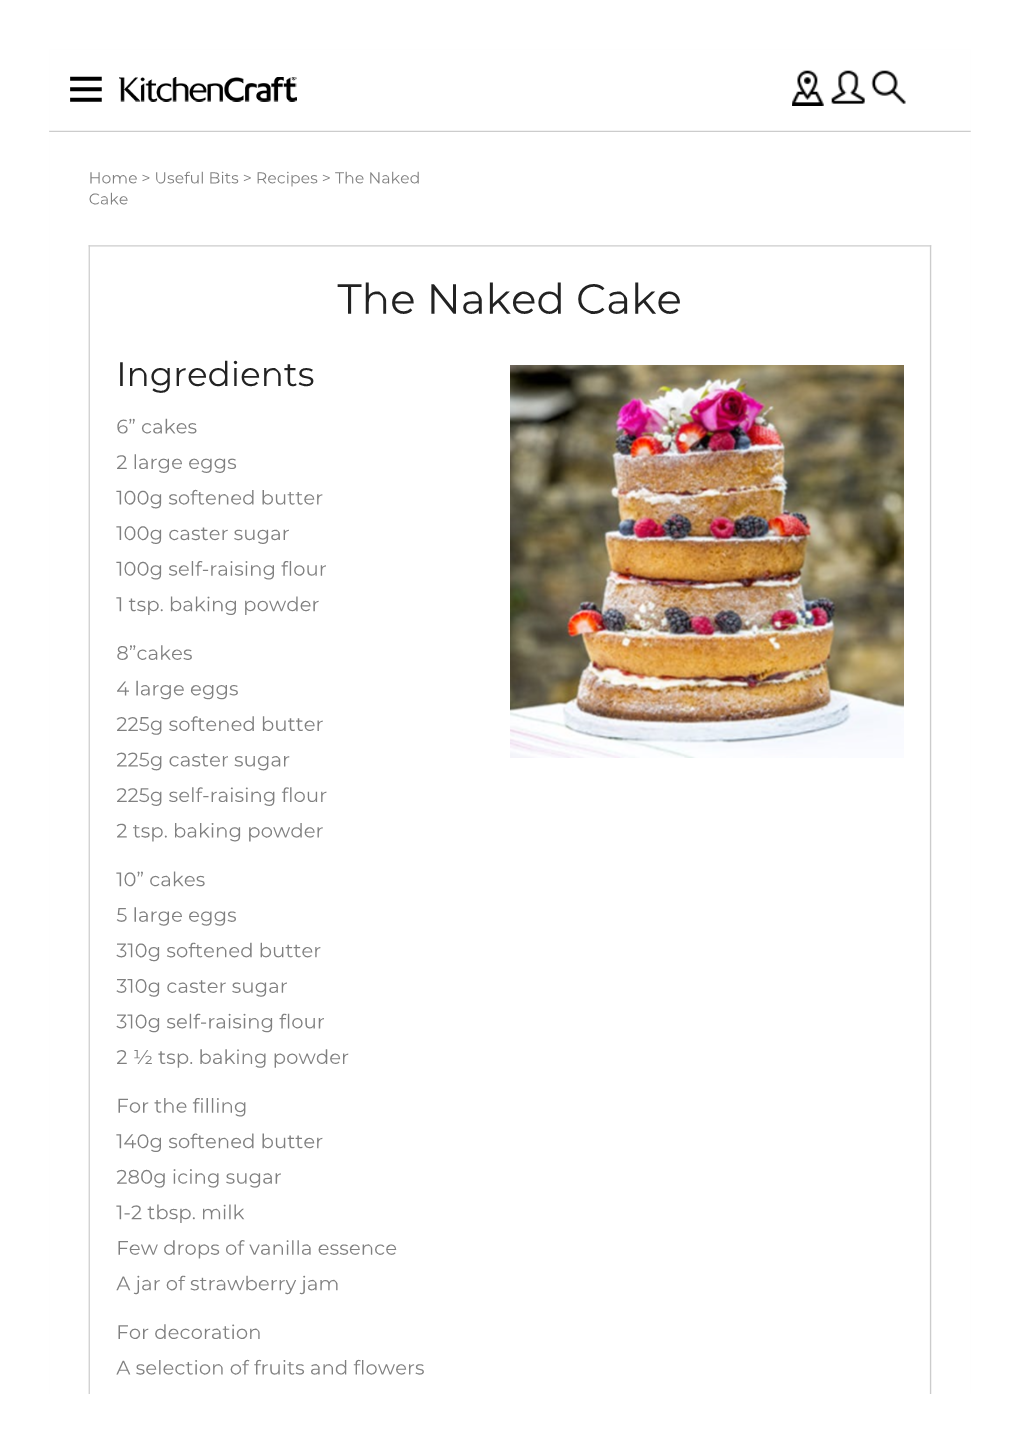 The Naked Cake